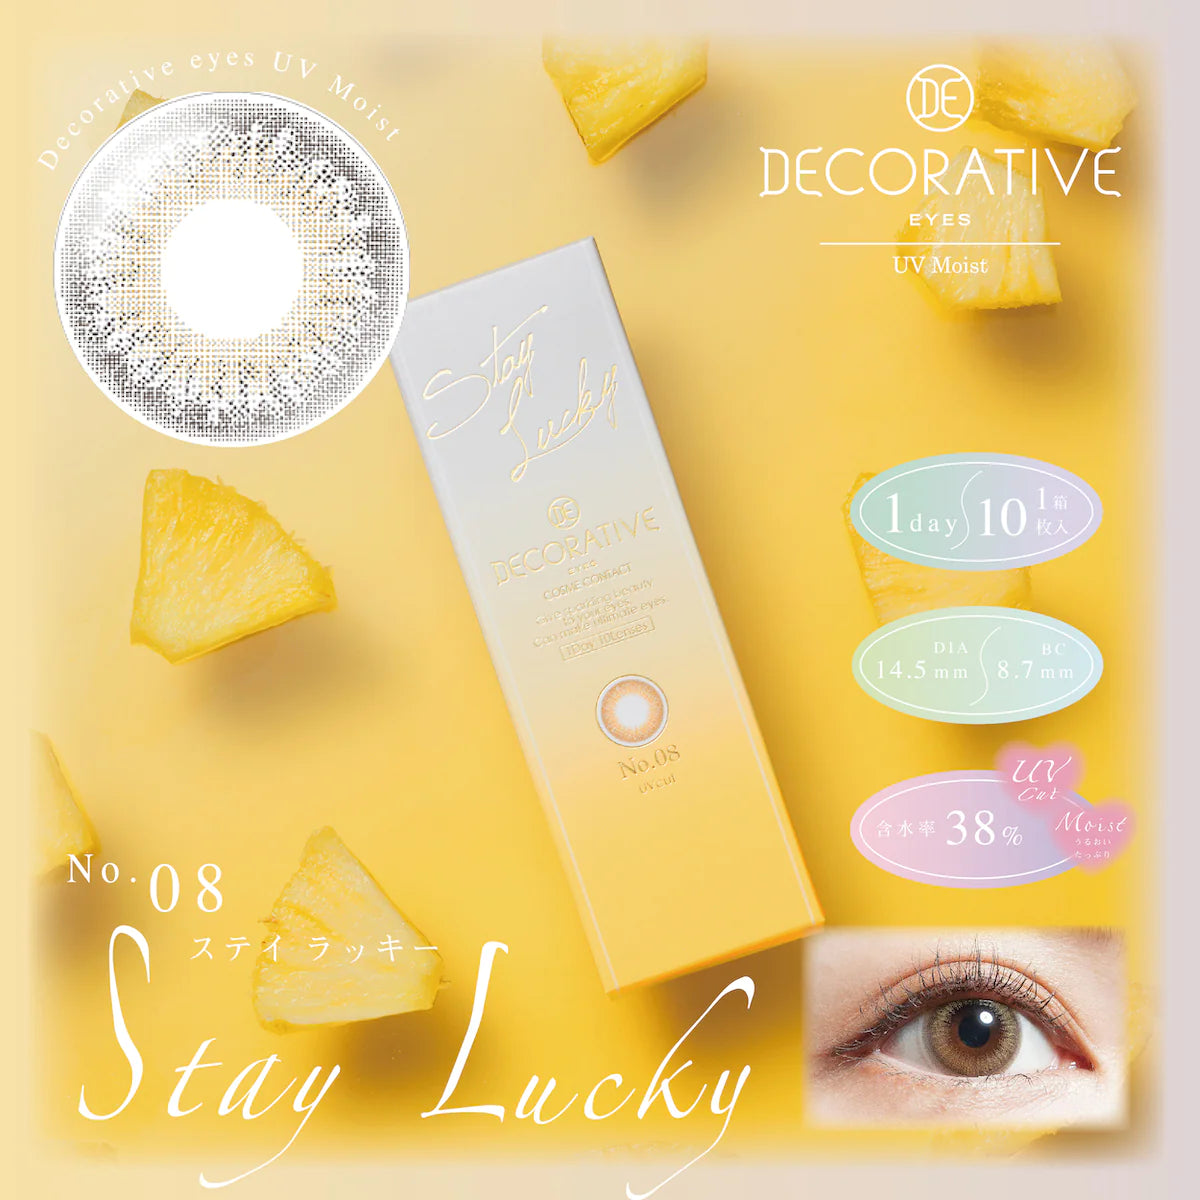 Decorative Eyes No.8 Star Lucky (DAILY/10P) - MASHED POTATO UK | Colour Contact Lens